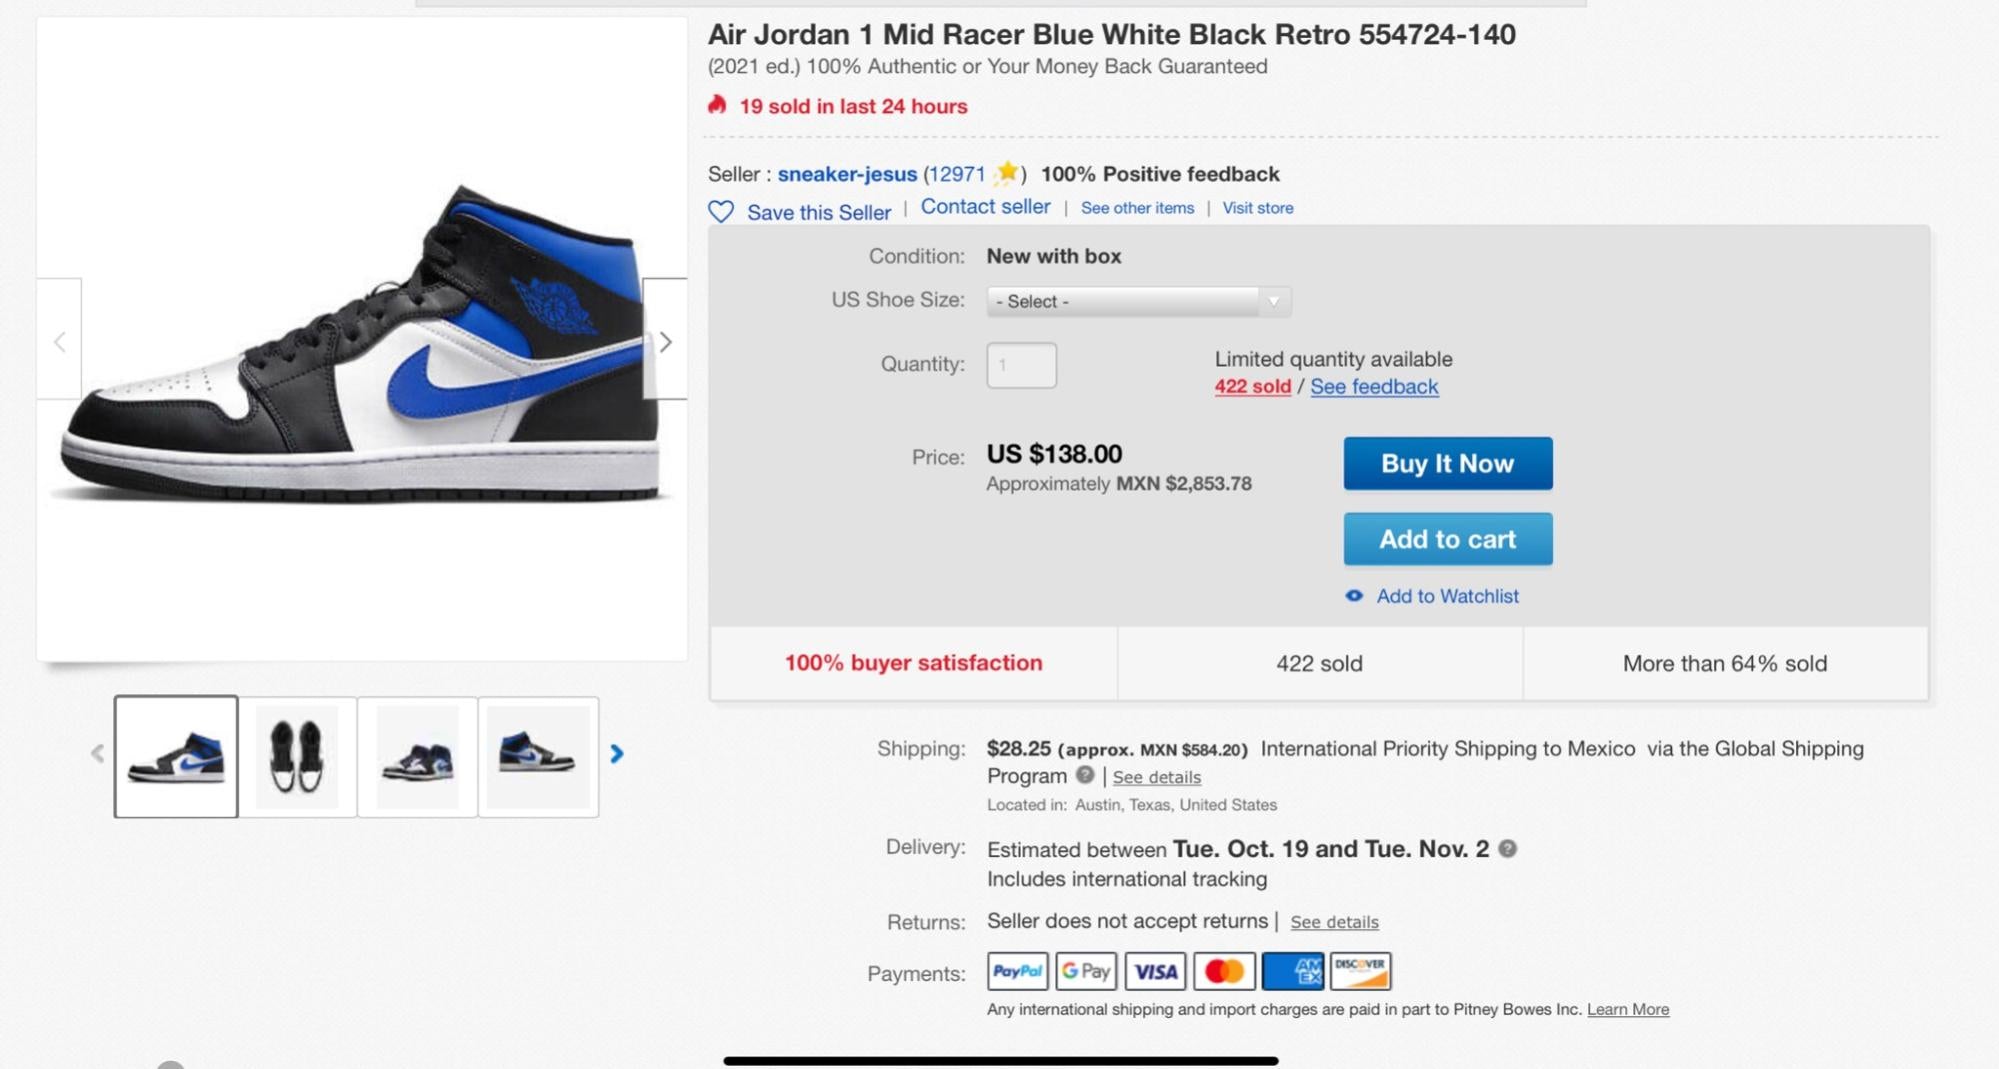 Example of an eBay listing for Air Jordan 1’s